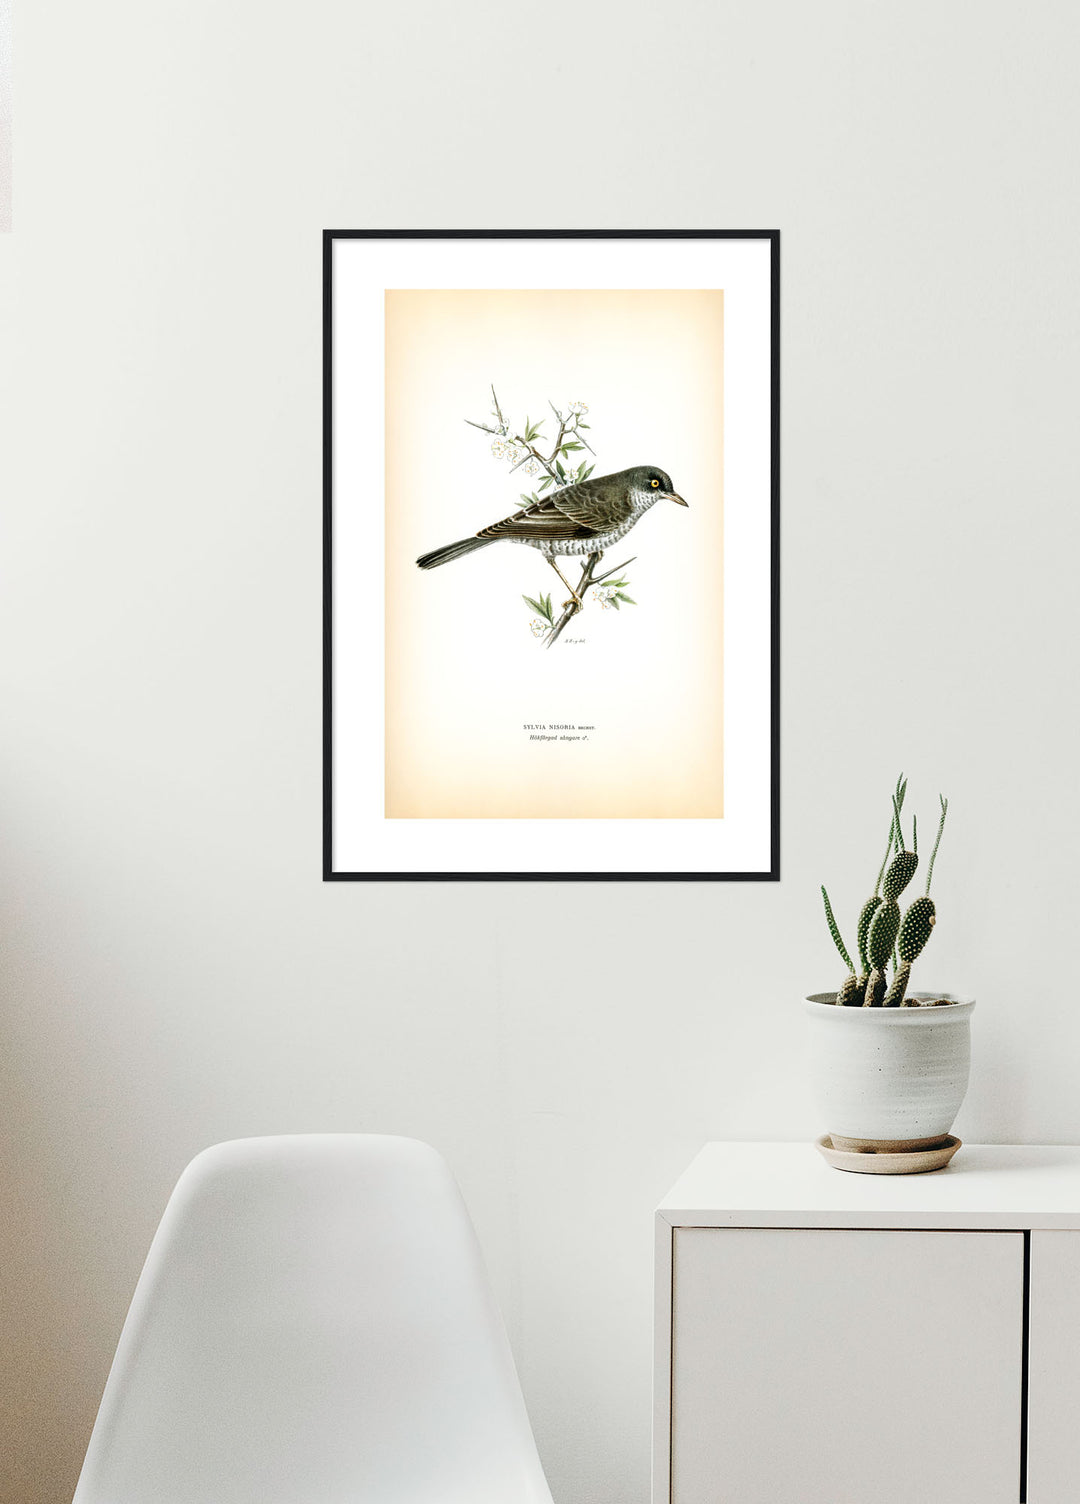 Fågeln Hökfärgad sångare på klassisk vintage poster/affisch